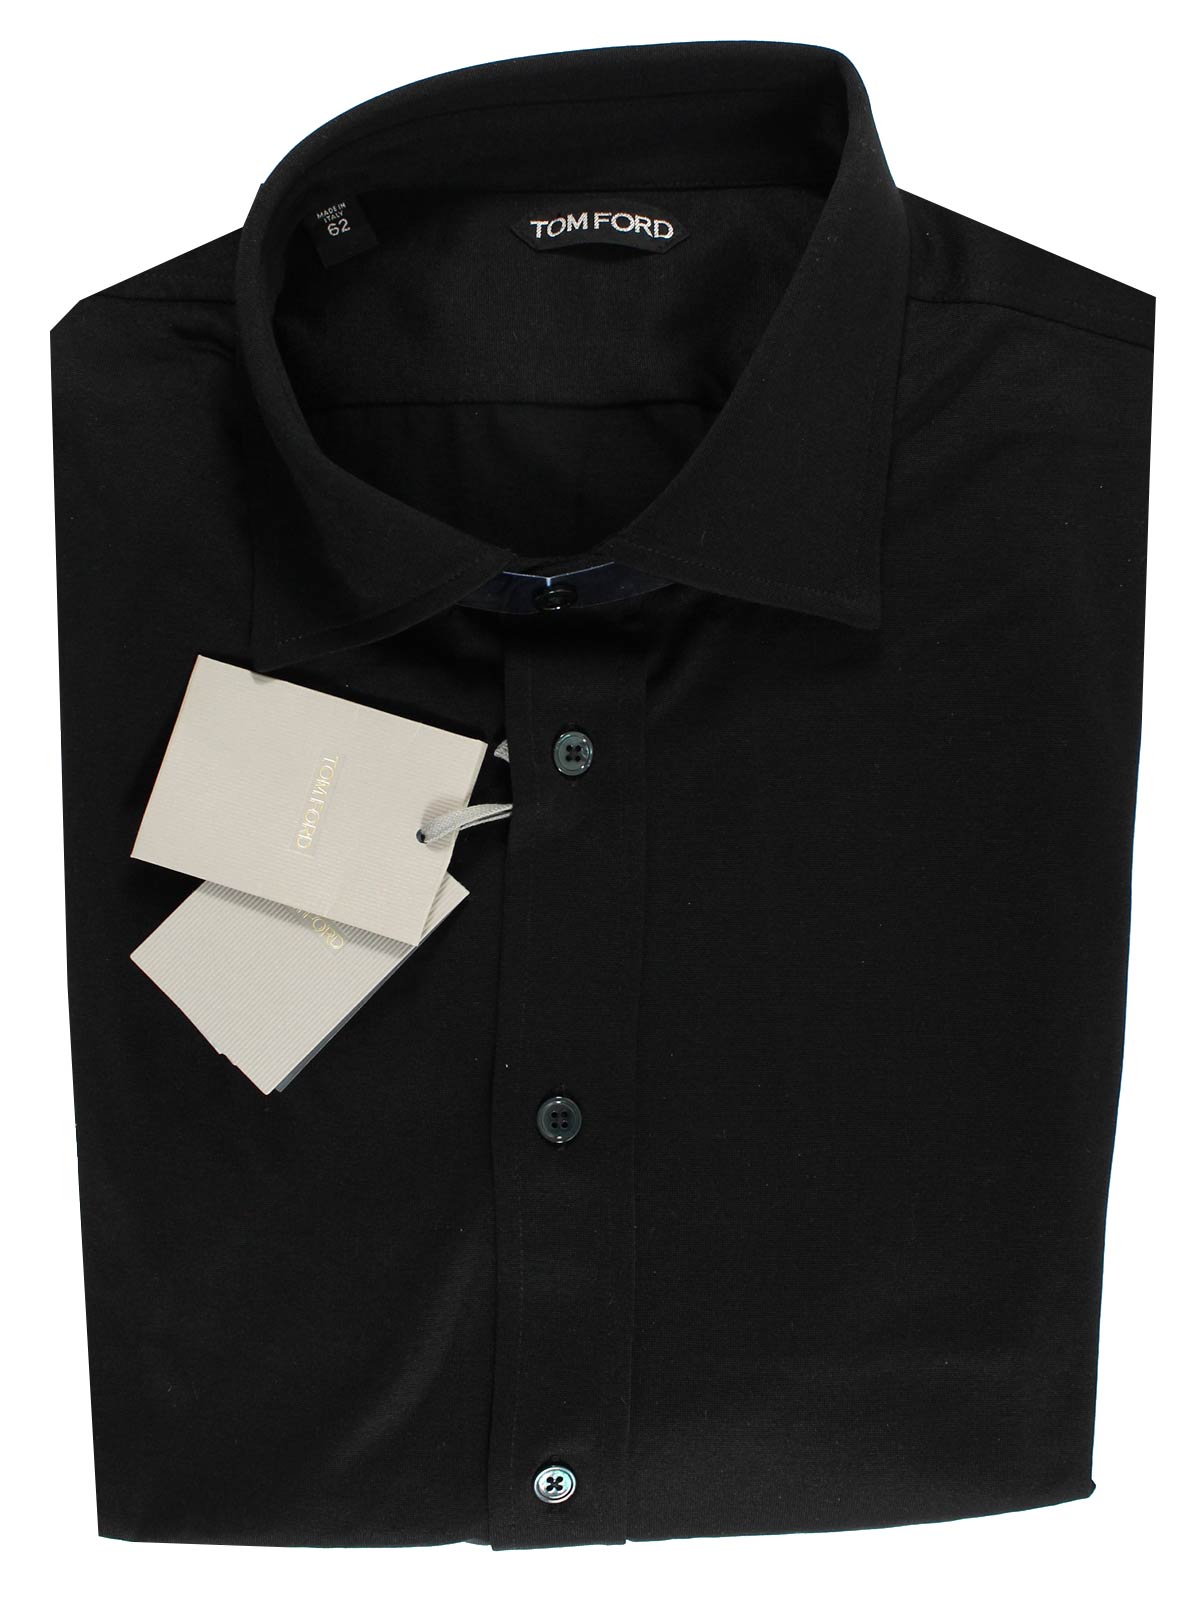 Tom Ford Shirt Black Triacetate Cotton 60 / 4XL SALE